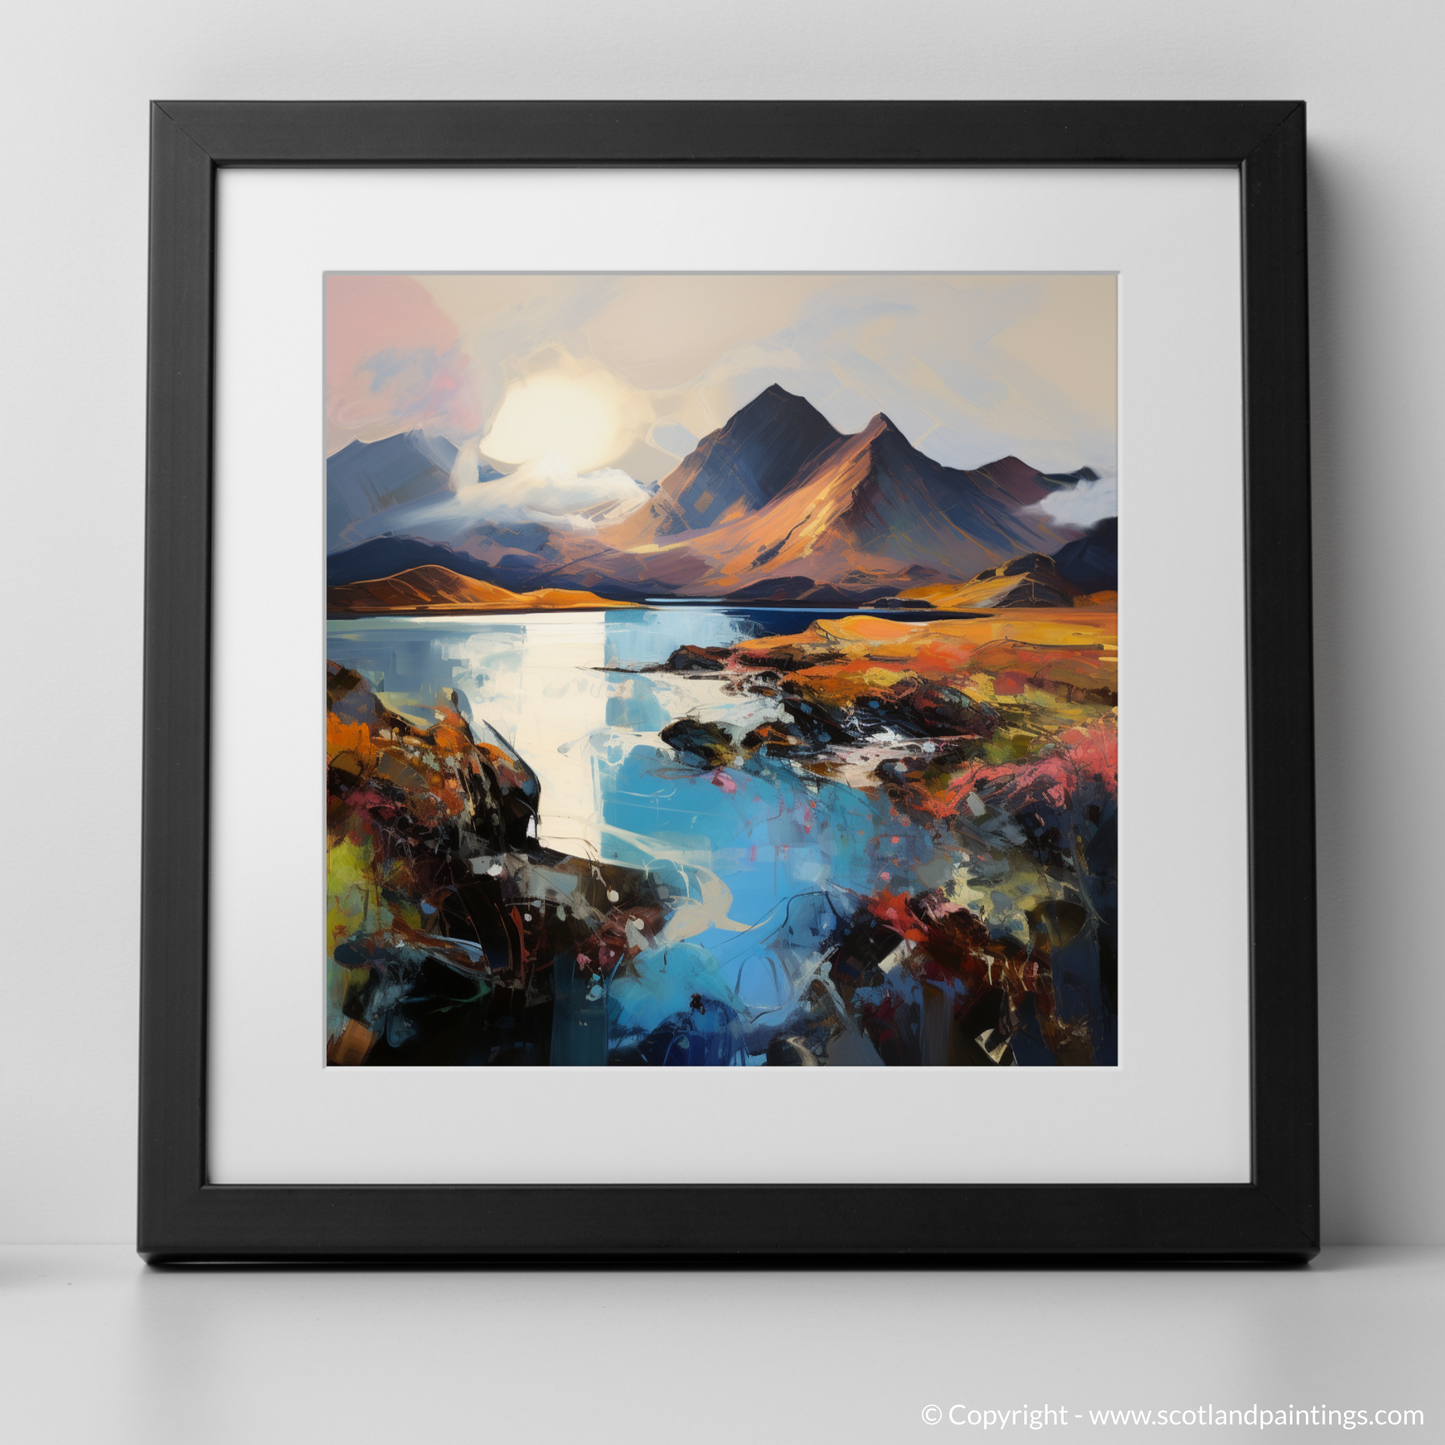 Art Print of The Cuillin, Isle of Skye with a black frame